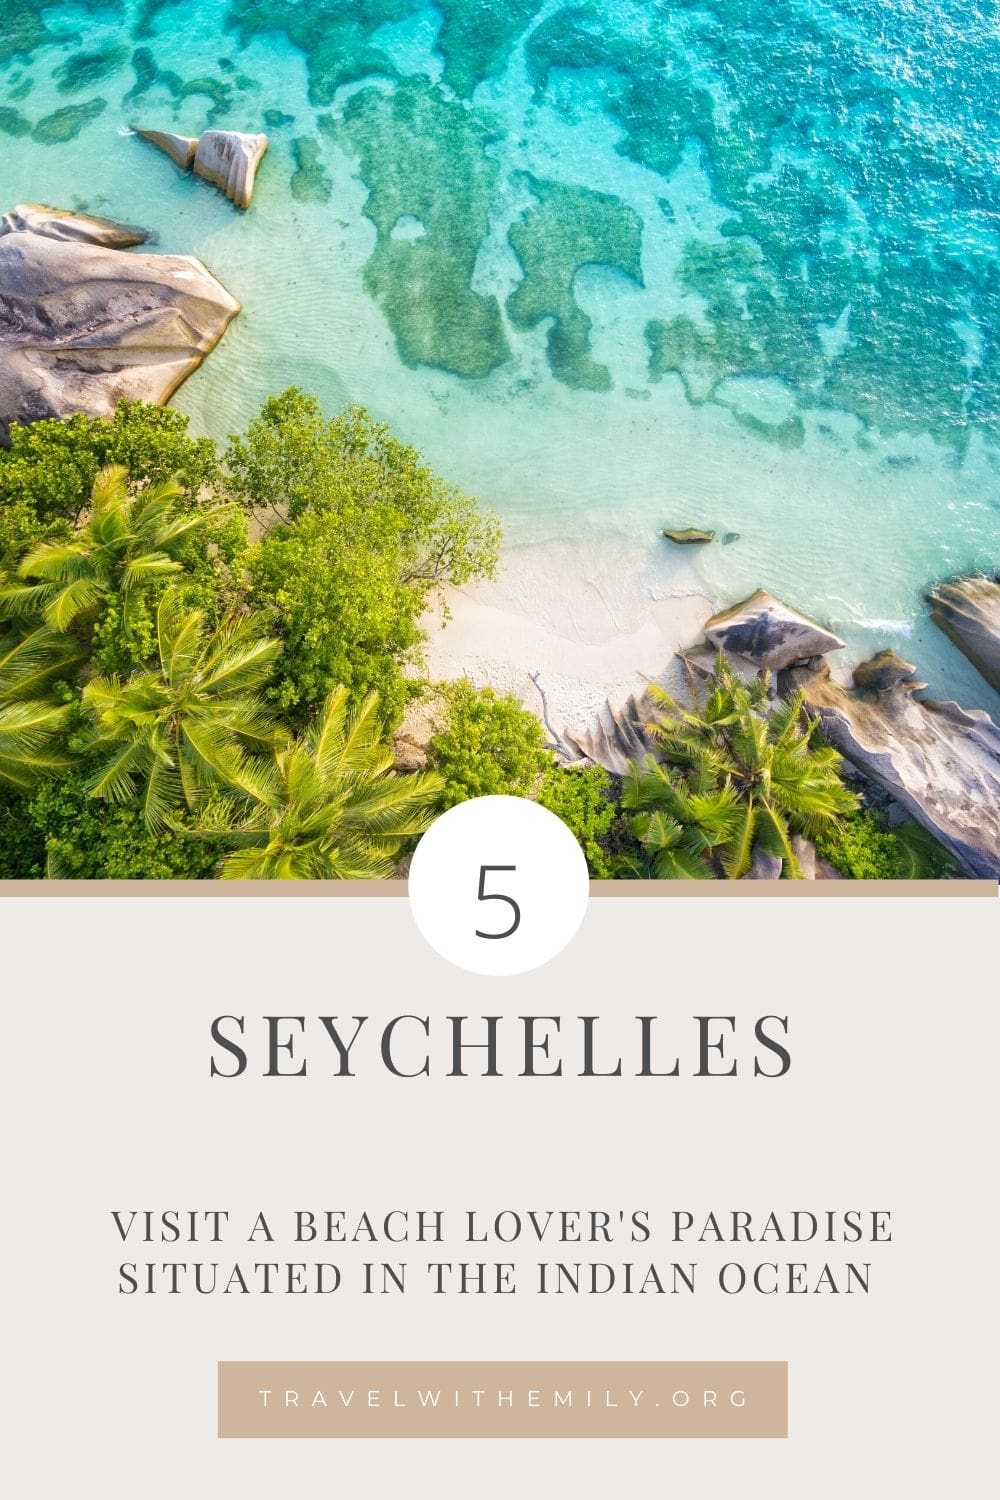 luxury beach holiday - Seychelles